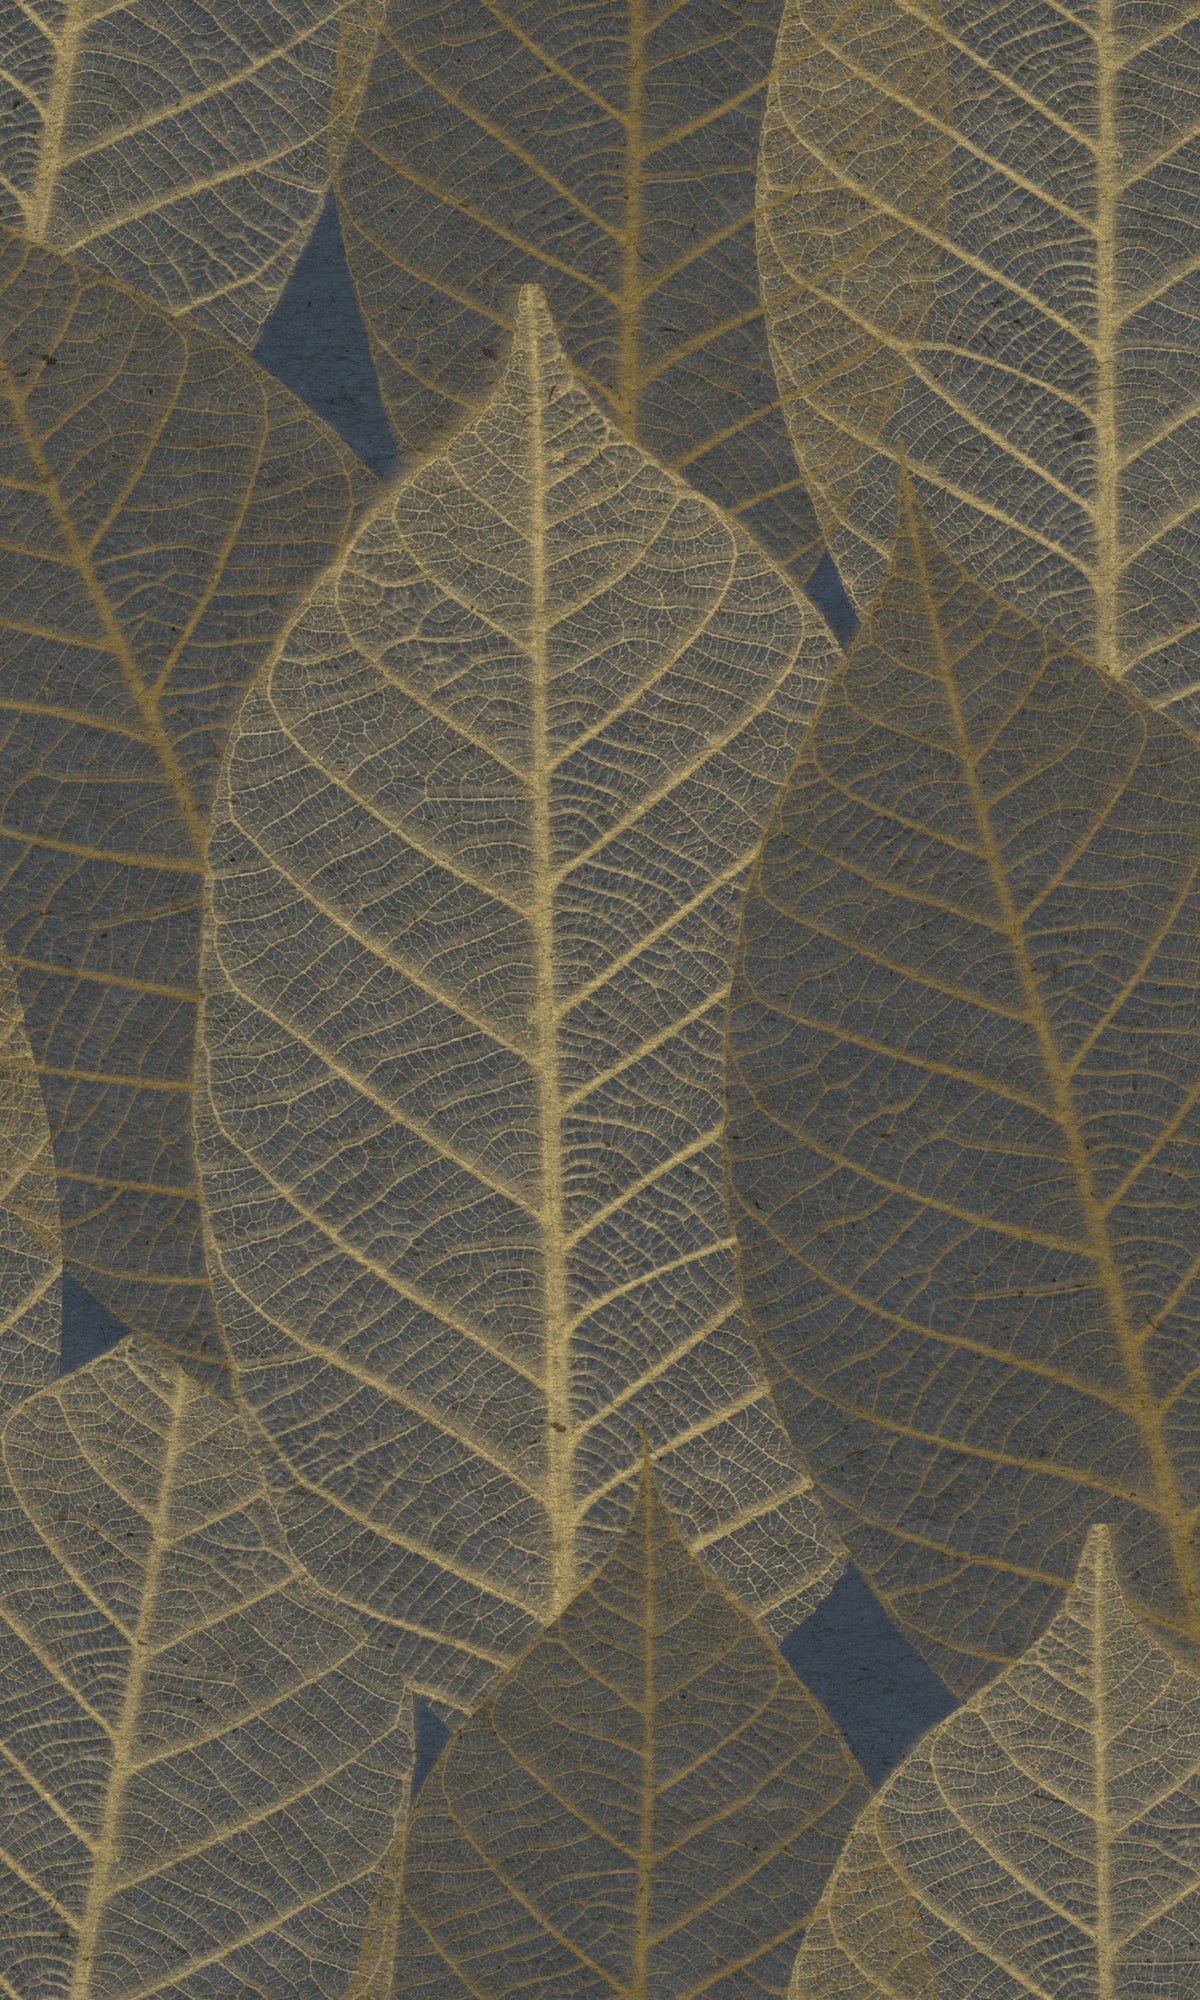 Midnight Blue Botanical Dry Leaves Veins Wallpaper R9139